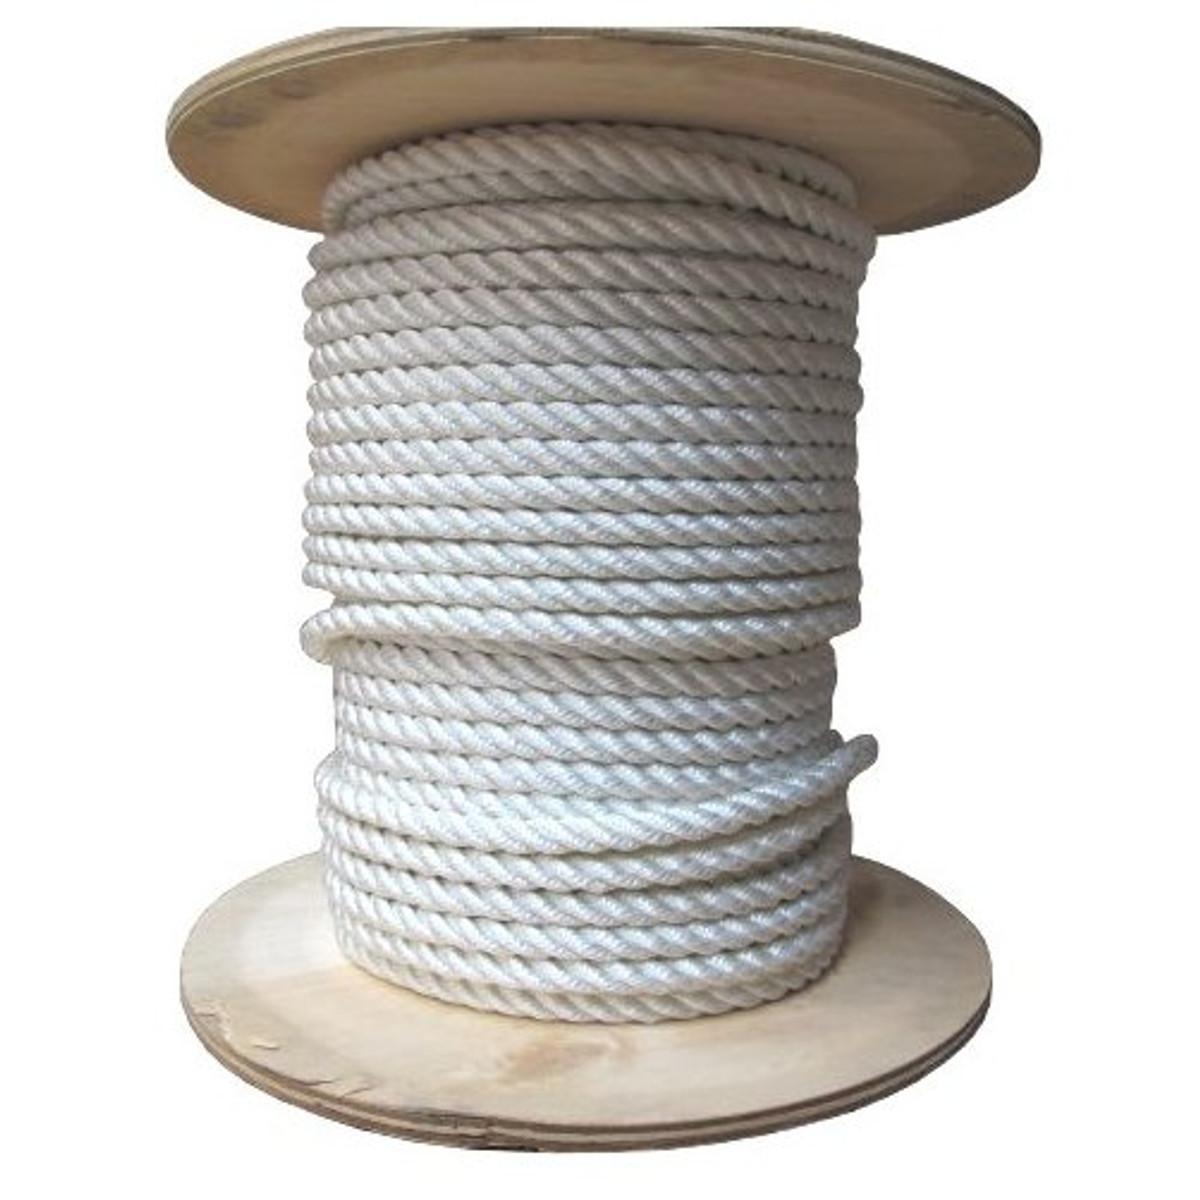 1/2 Nylon Rope (Per ft.) - Safe Work Load 525 lbs - Greschlers Hardware